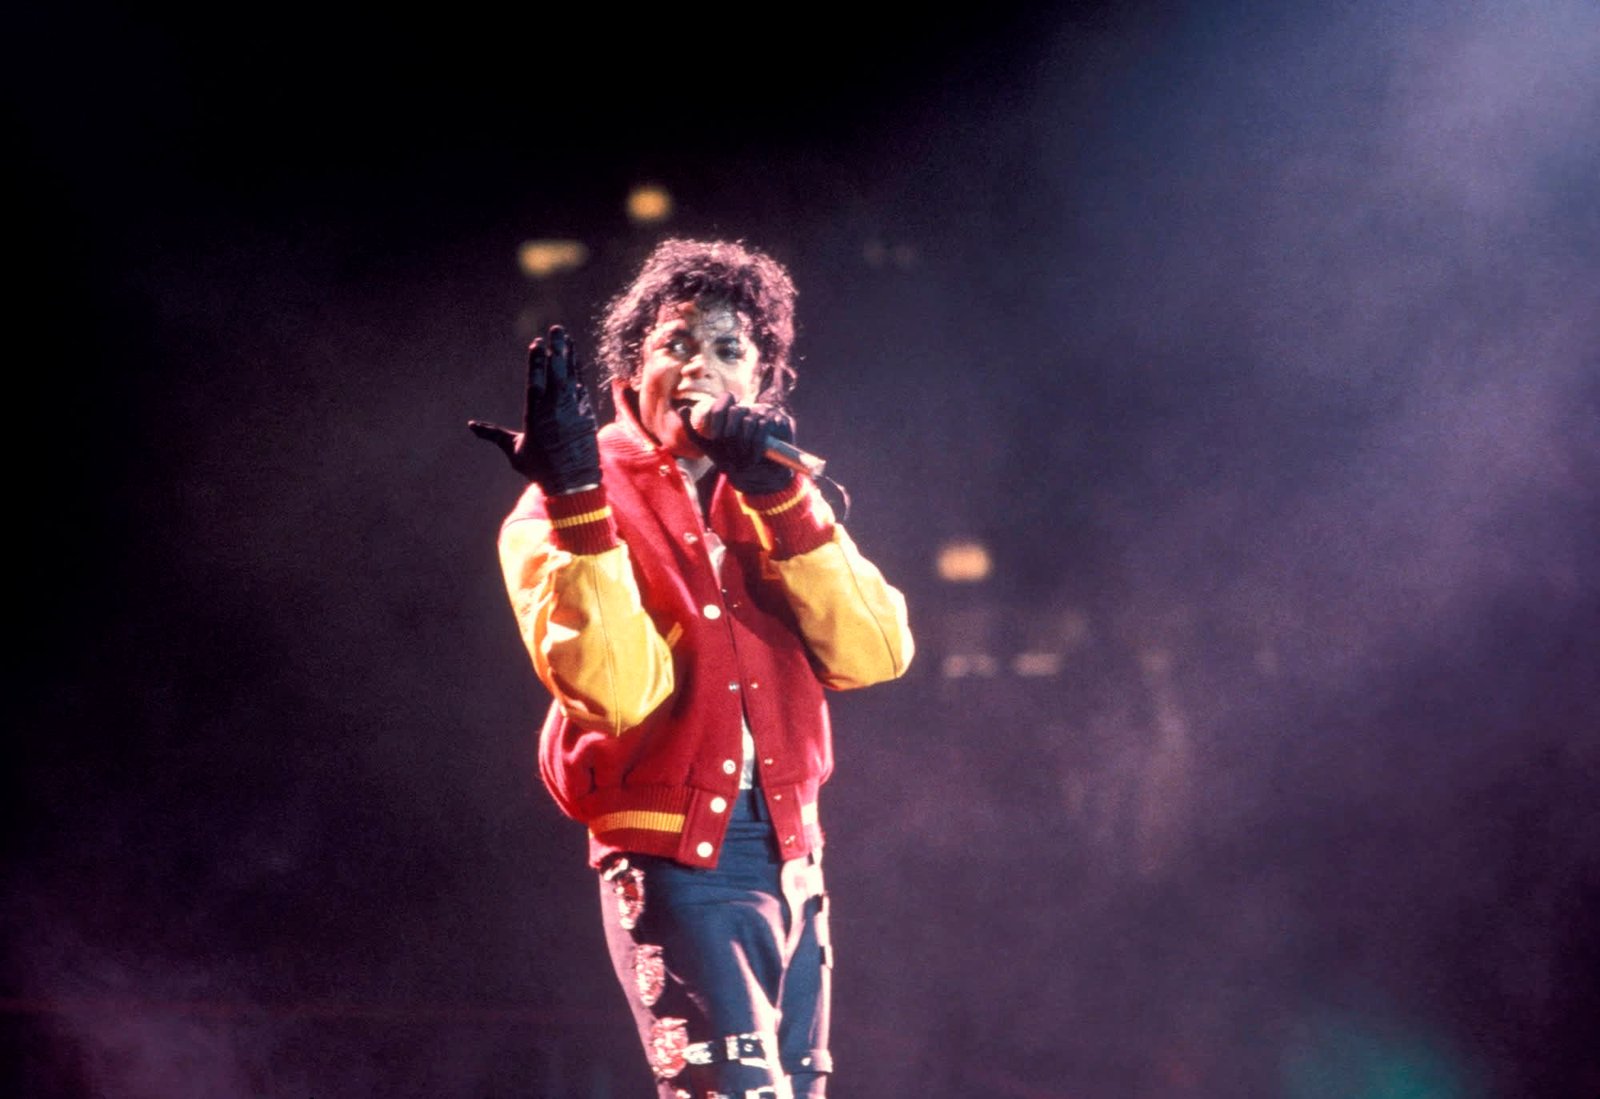 Michael Jackson breaks records after death - Over a billion views for Billie Jean